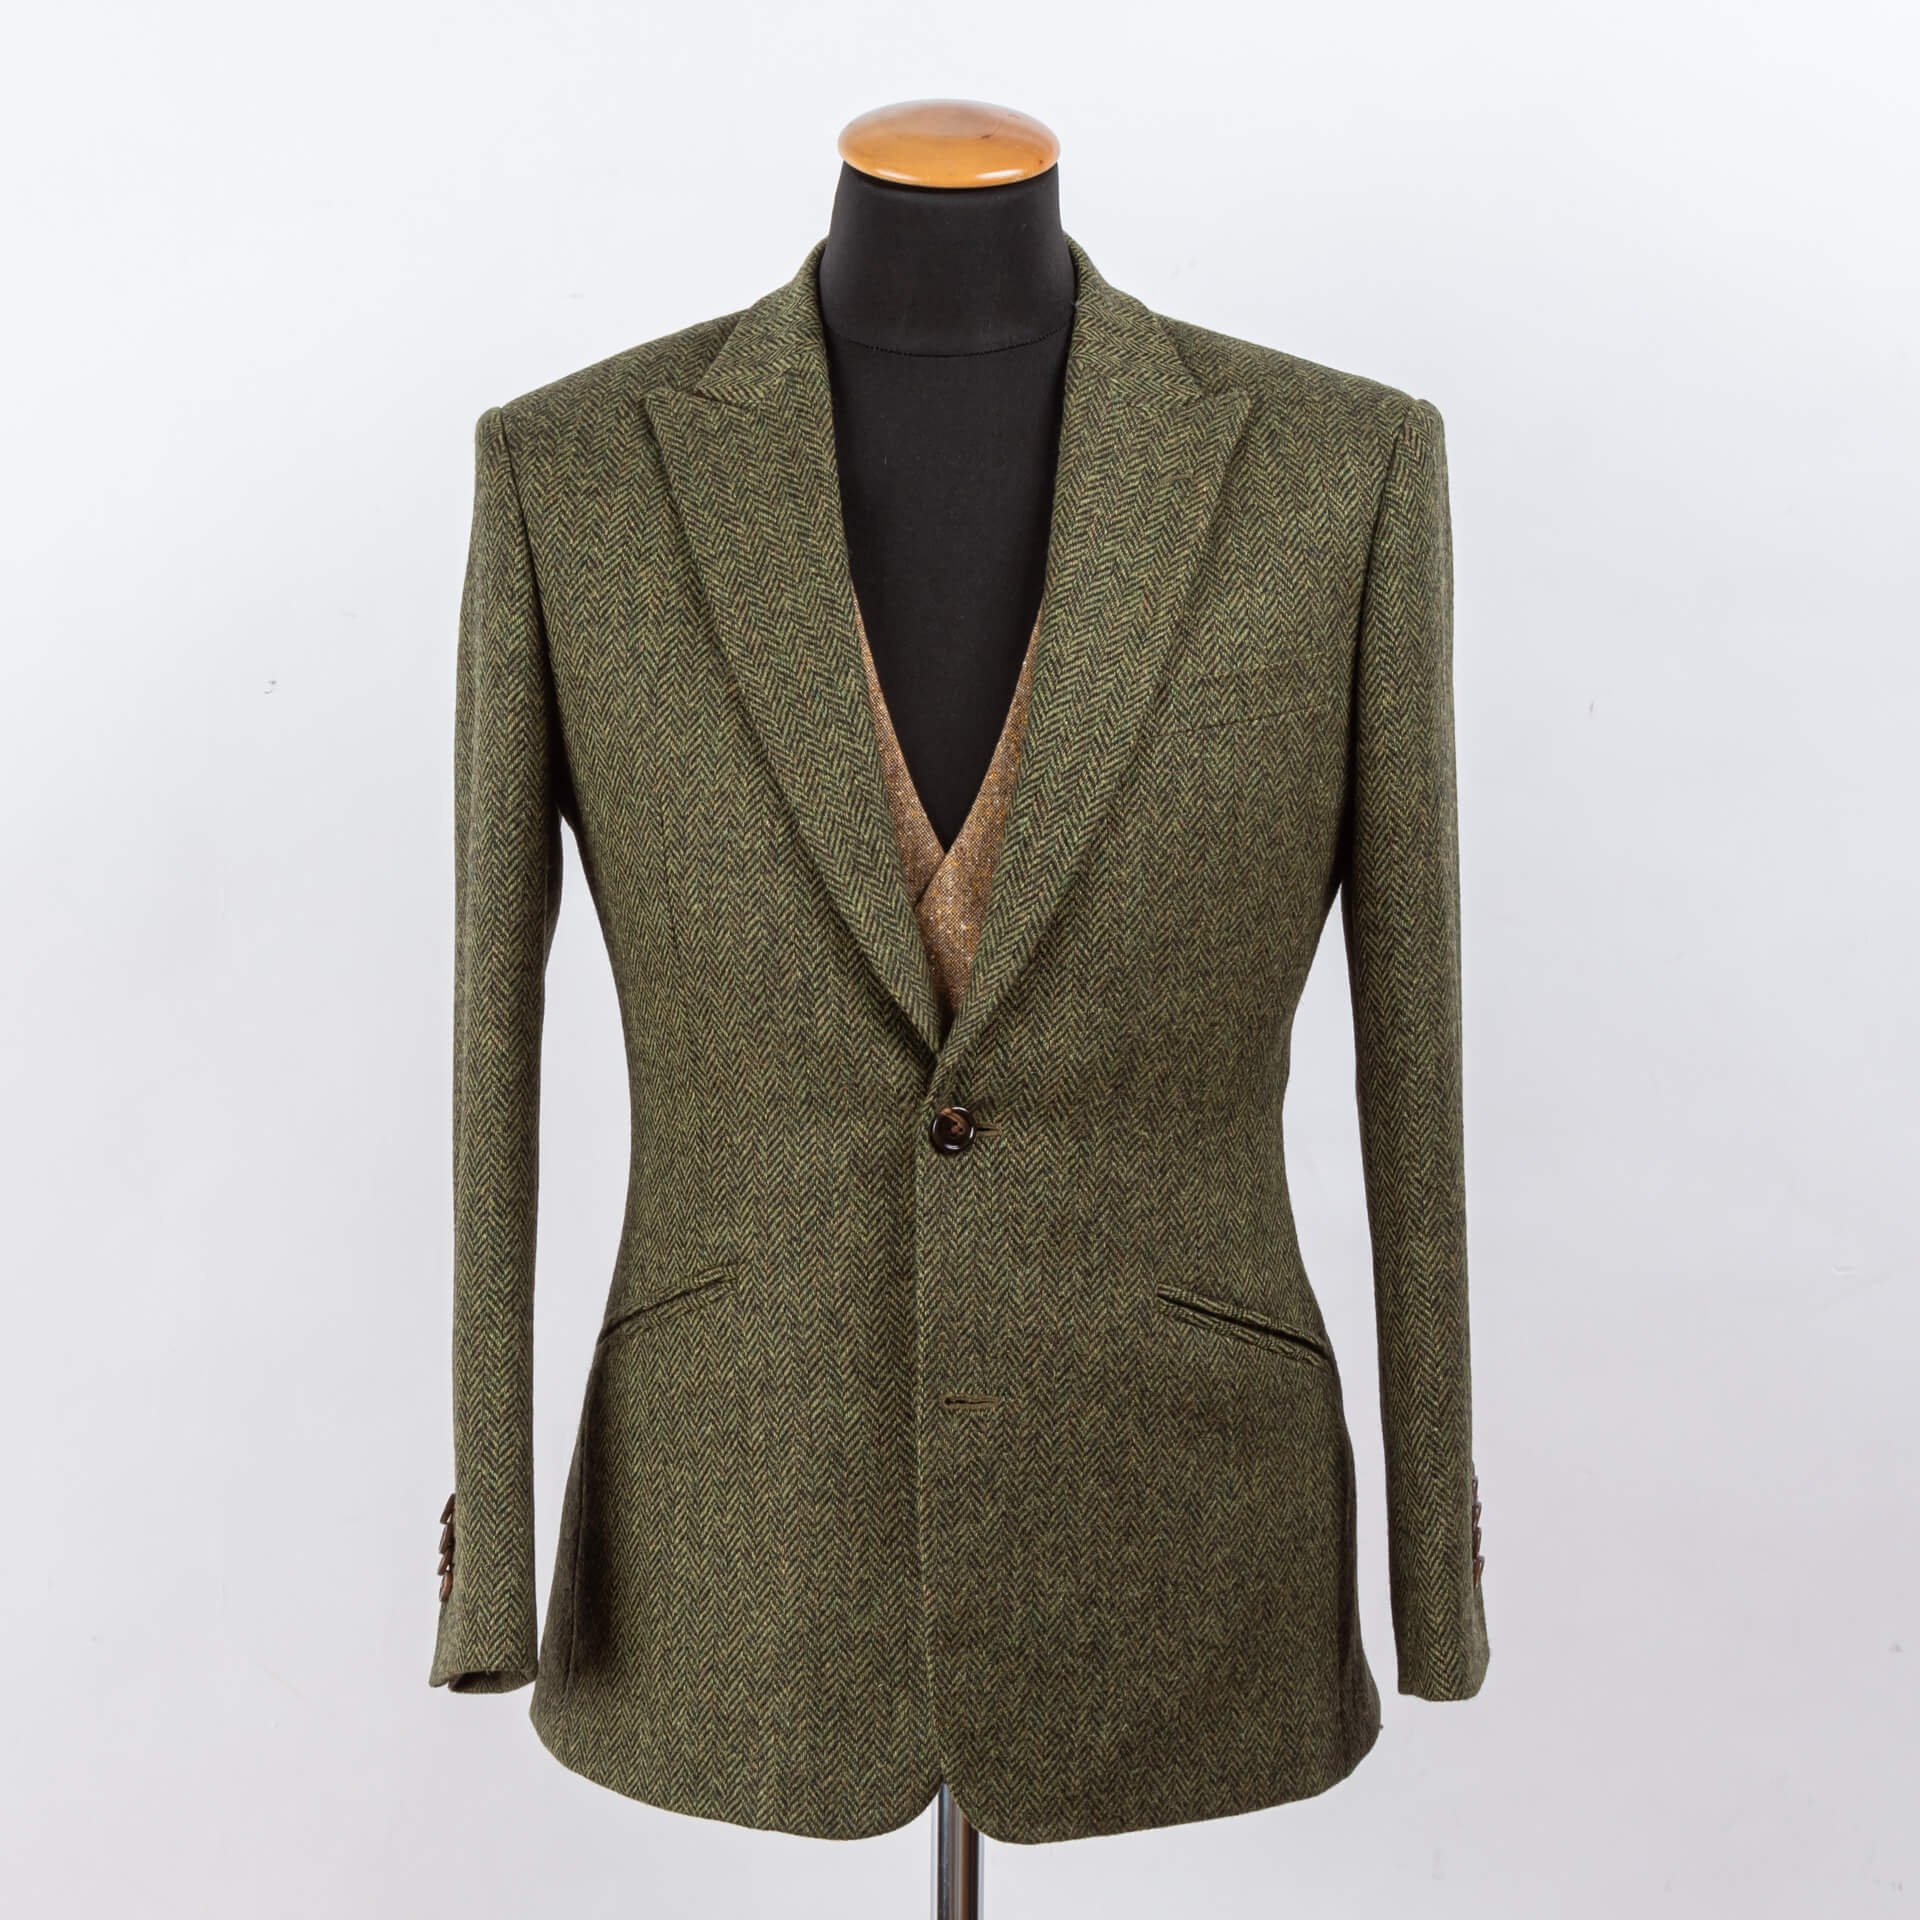 Olive Green Suit Tweed